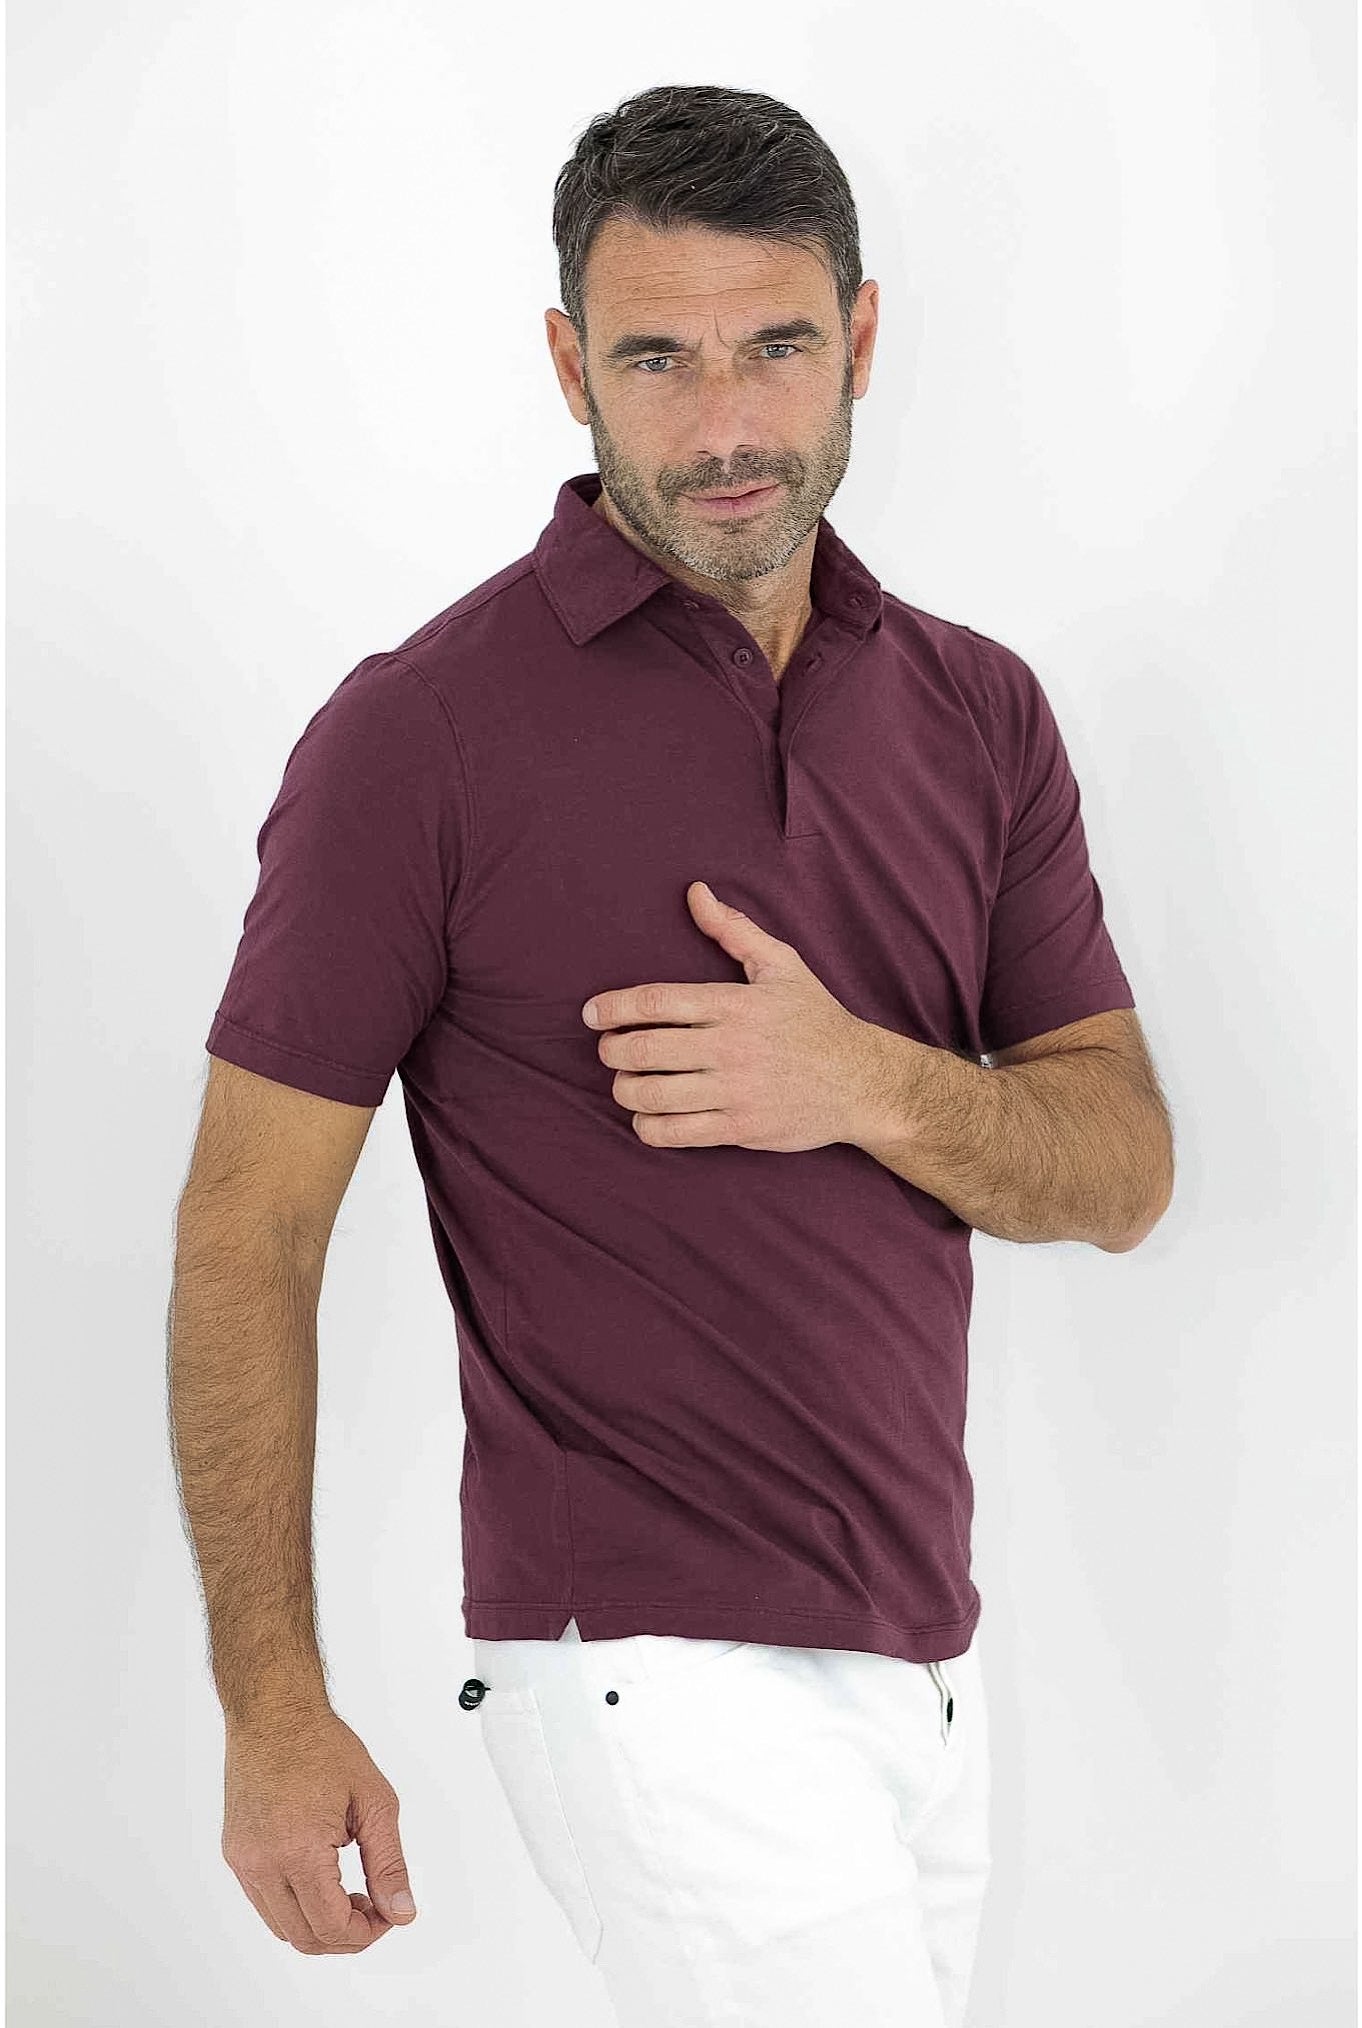 KIRED Pima Cotton Polo Short Sleeves Burgundy